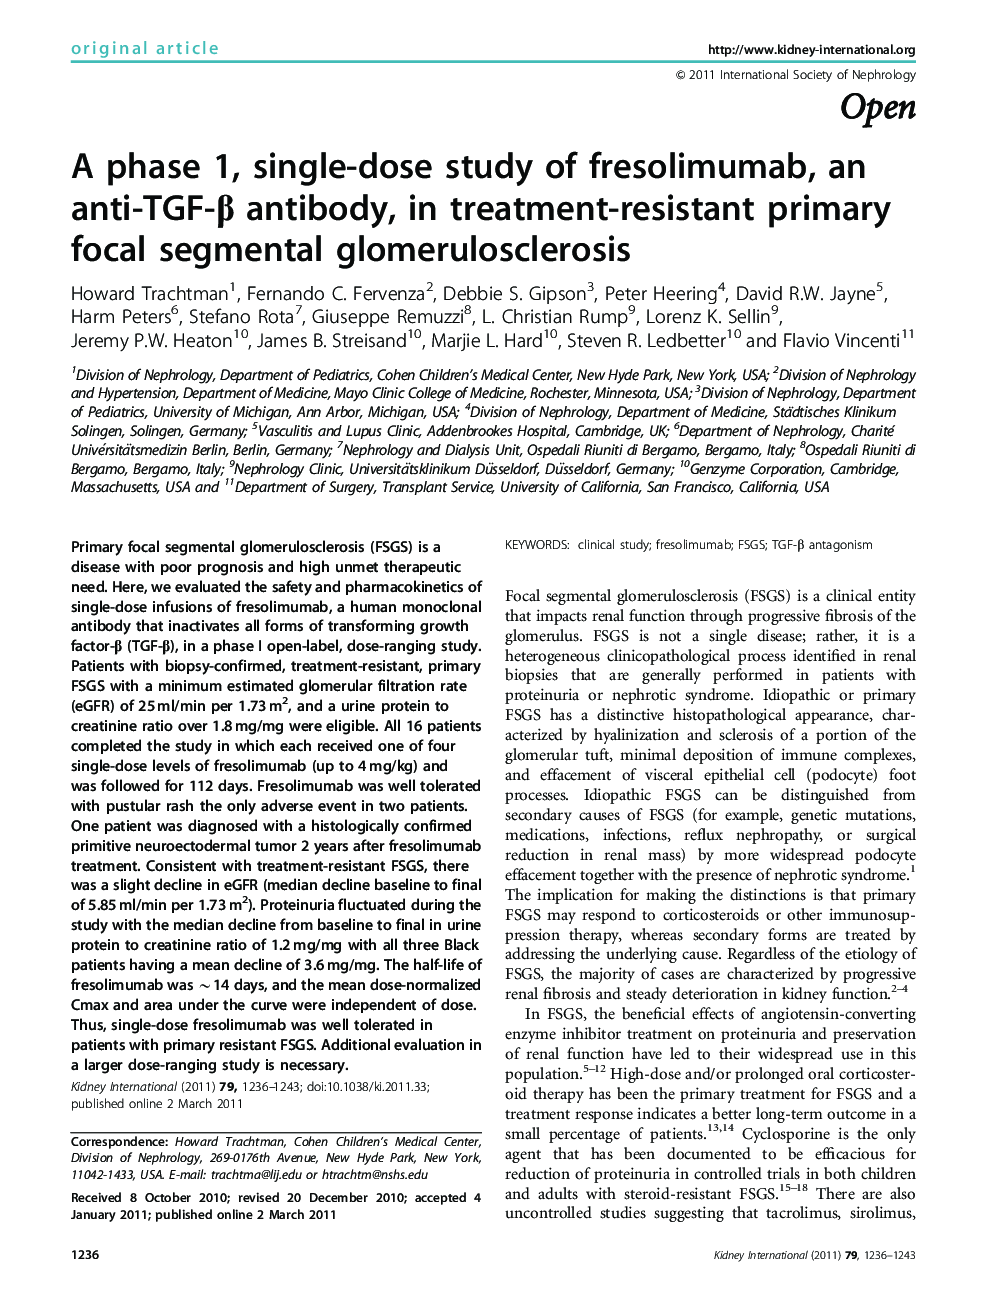 A phase 1, single-dose study of fresolimumab, an anti-TGF-Î² antibody, in treatment-resistant primary focal segmental glomerulosclerosis